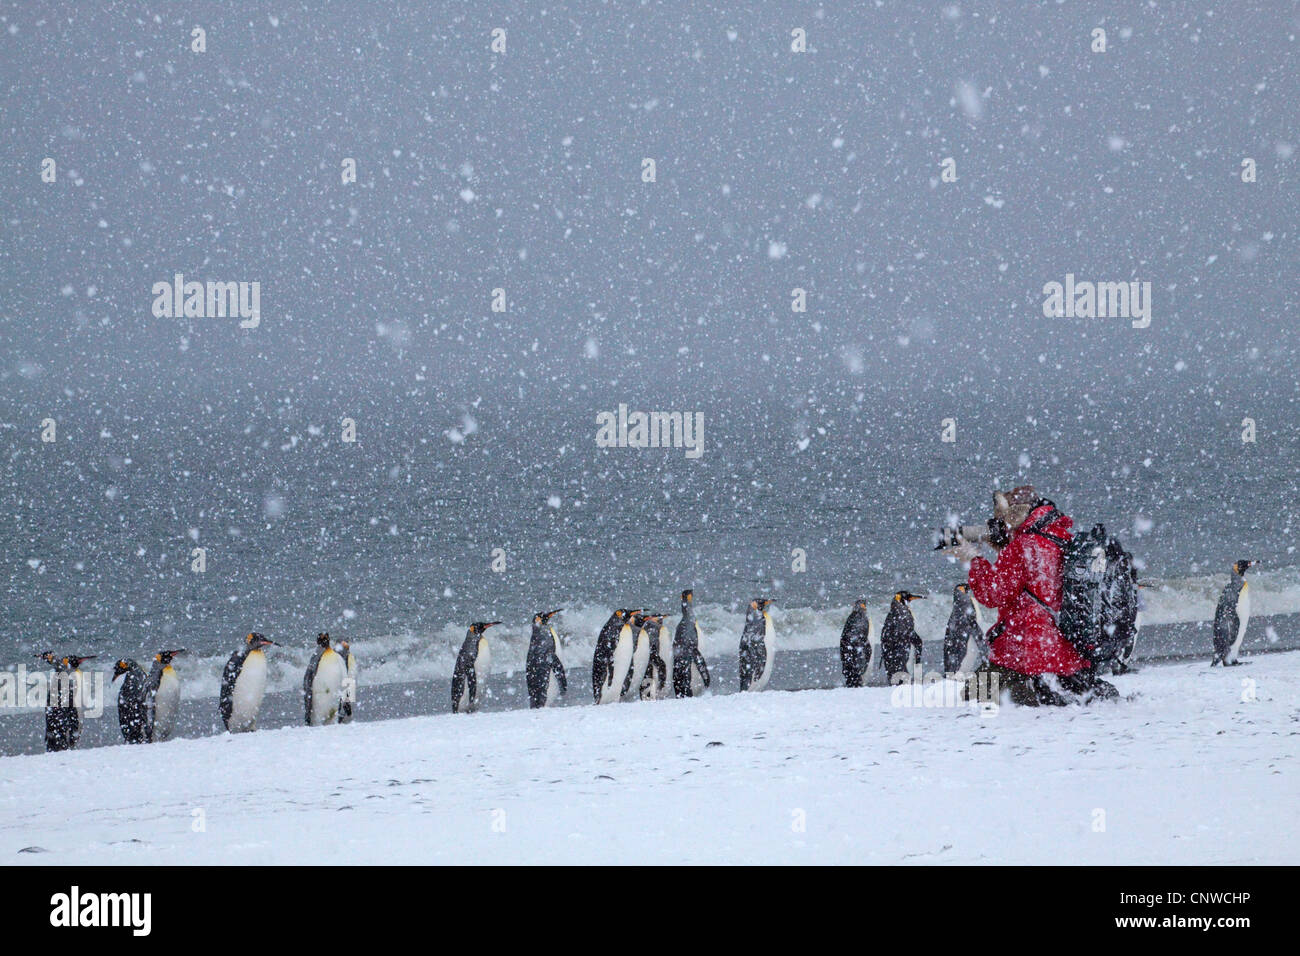 King Penguin (Aptenodytes Patagonicus), Fotograf, Fotografieren der Pinguine im Schnee Flut, Suedgeorgien, Salisbury Plains Stockfoto